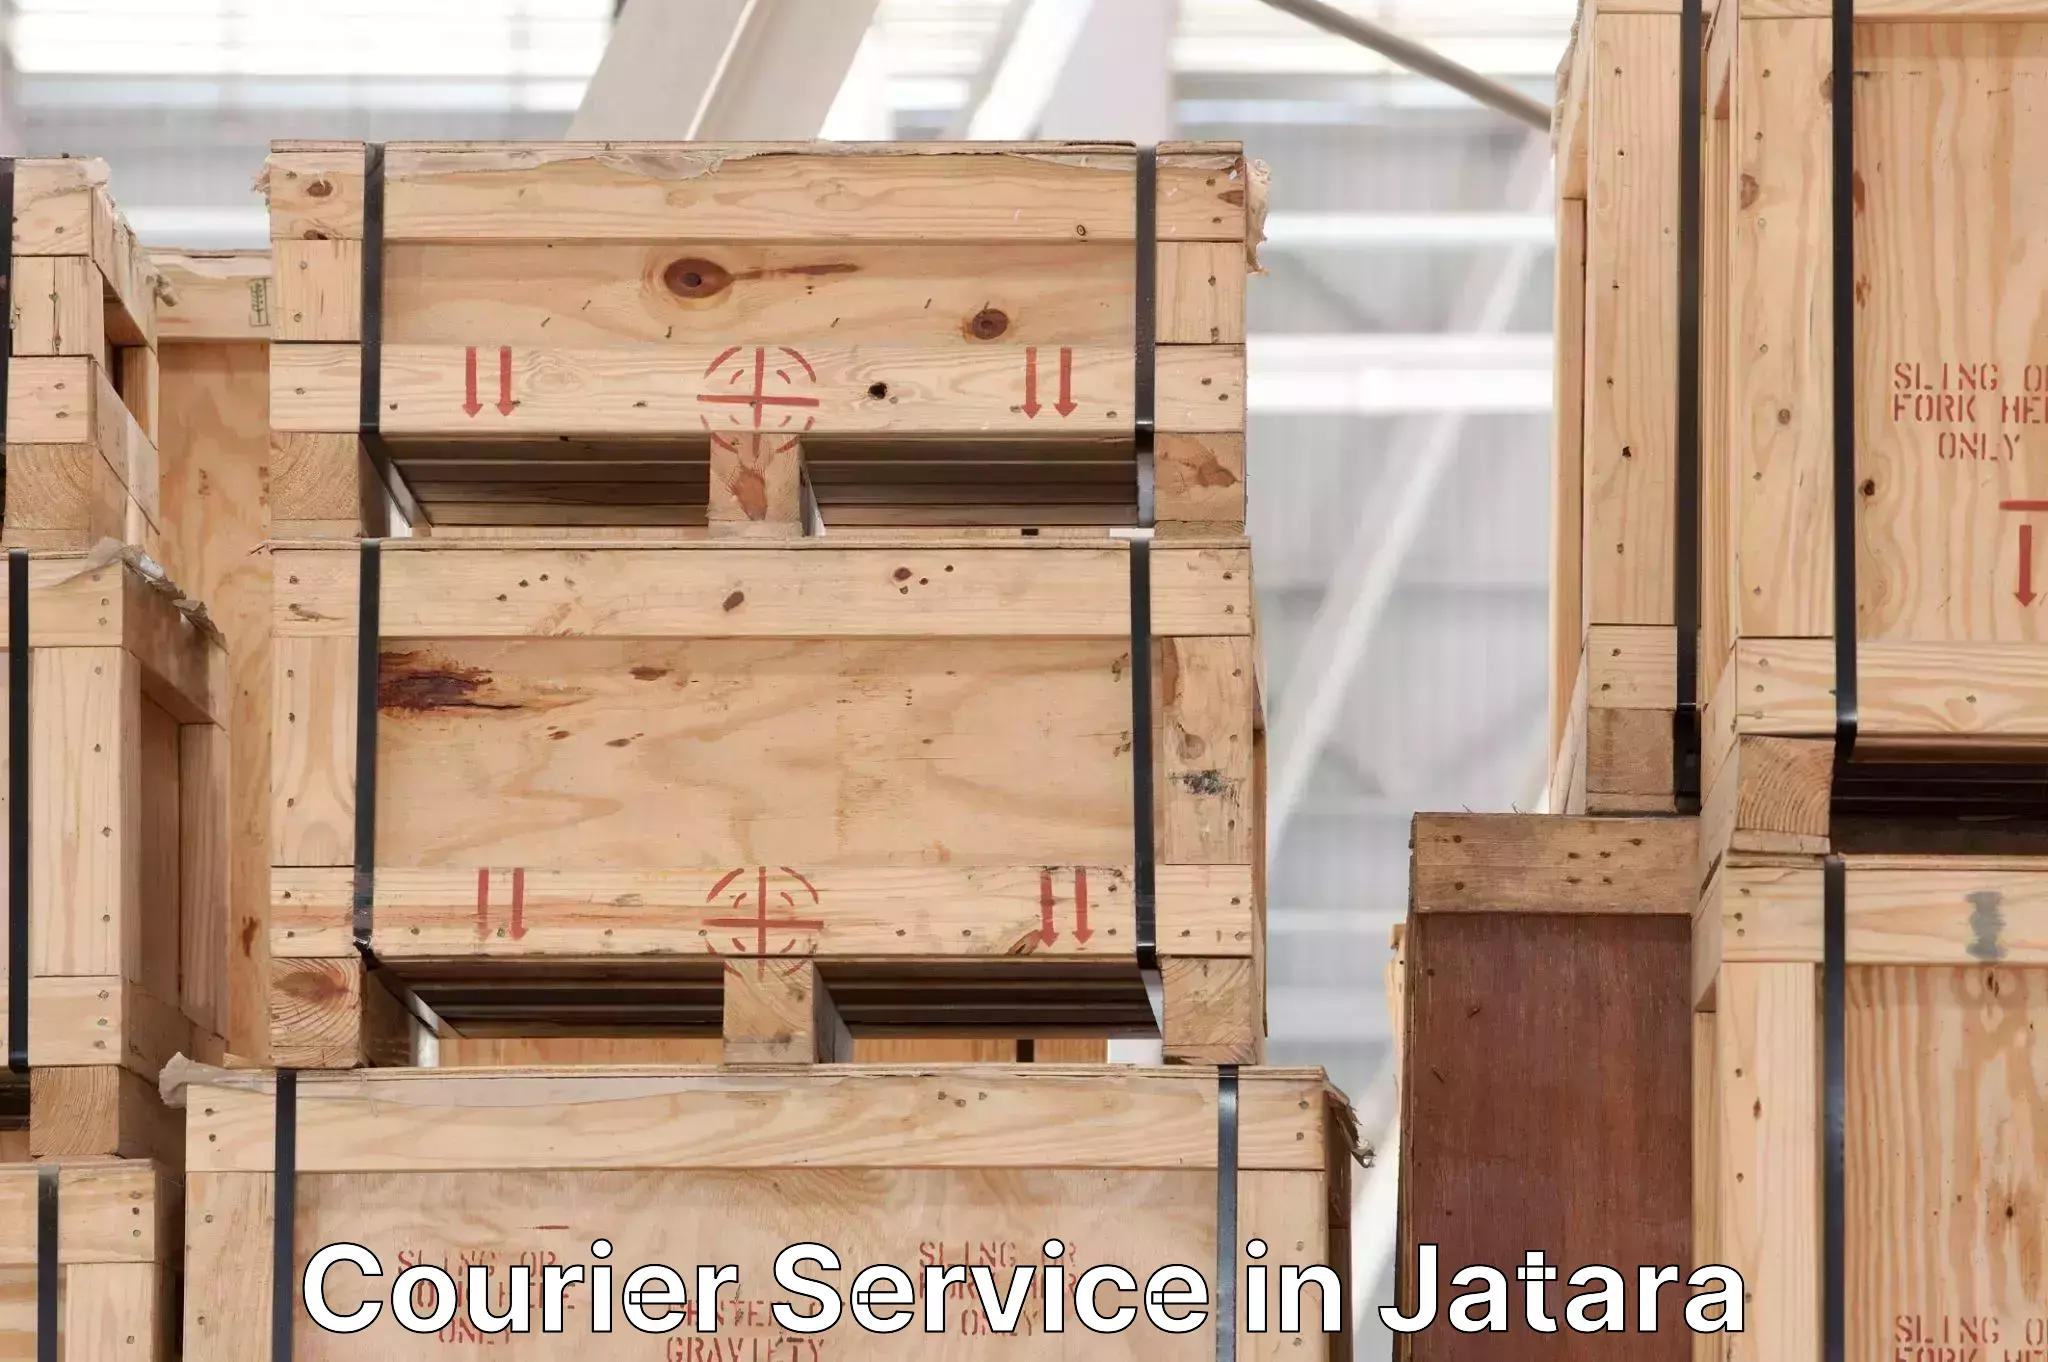 Express courier capabilities in Jatara